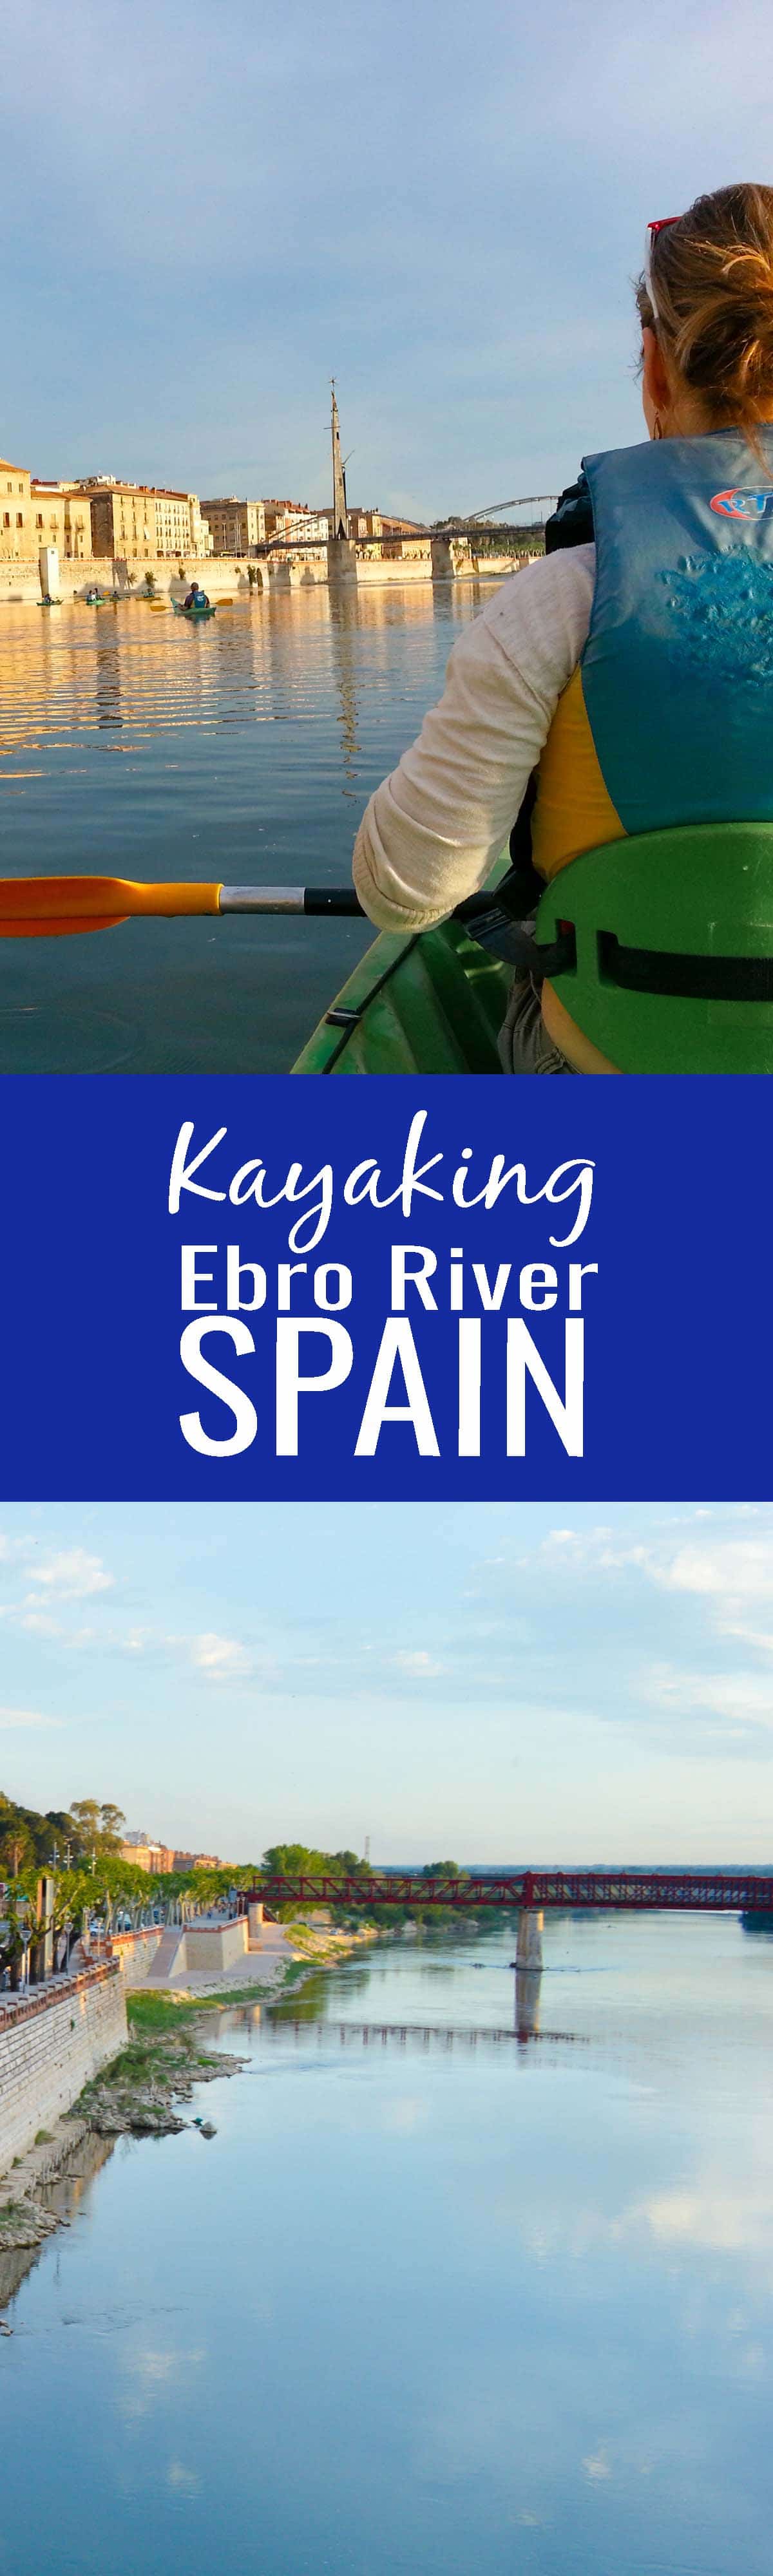 Kayaking the Ebro River in Spain – Explore the villages of Terres de l’Ebre, Spain via a kayak on the Ebro River. A bucket list adventure!